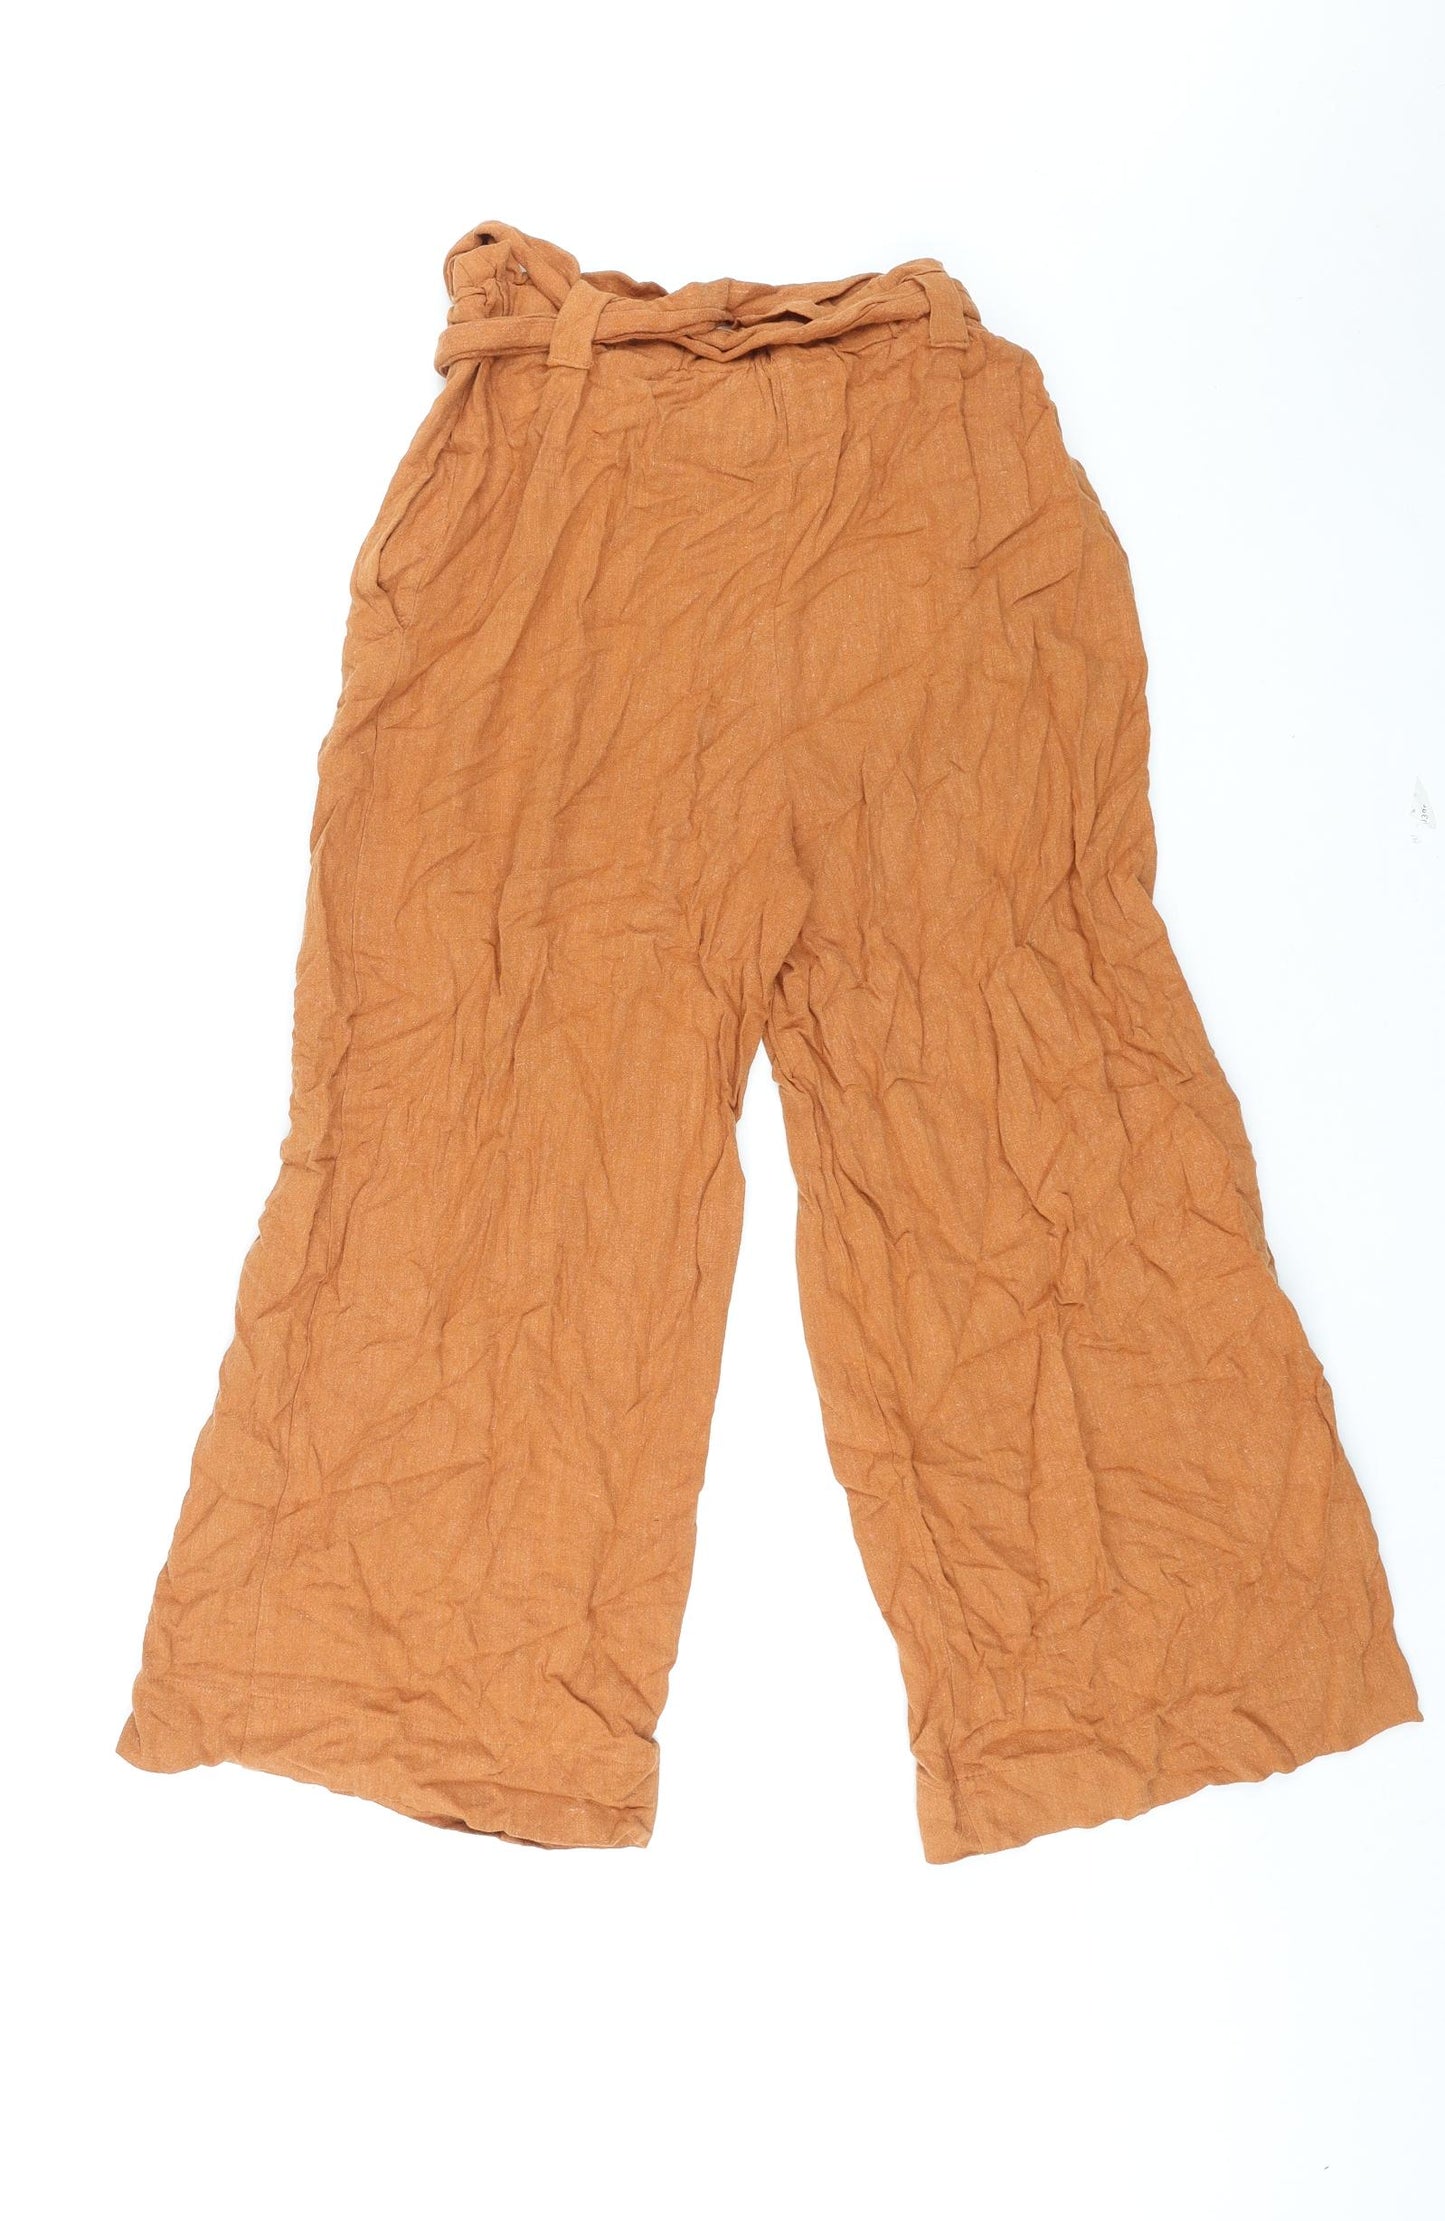 New Look Womens Orange Viscose Trousers Size 8 L23 in Regular Buckle